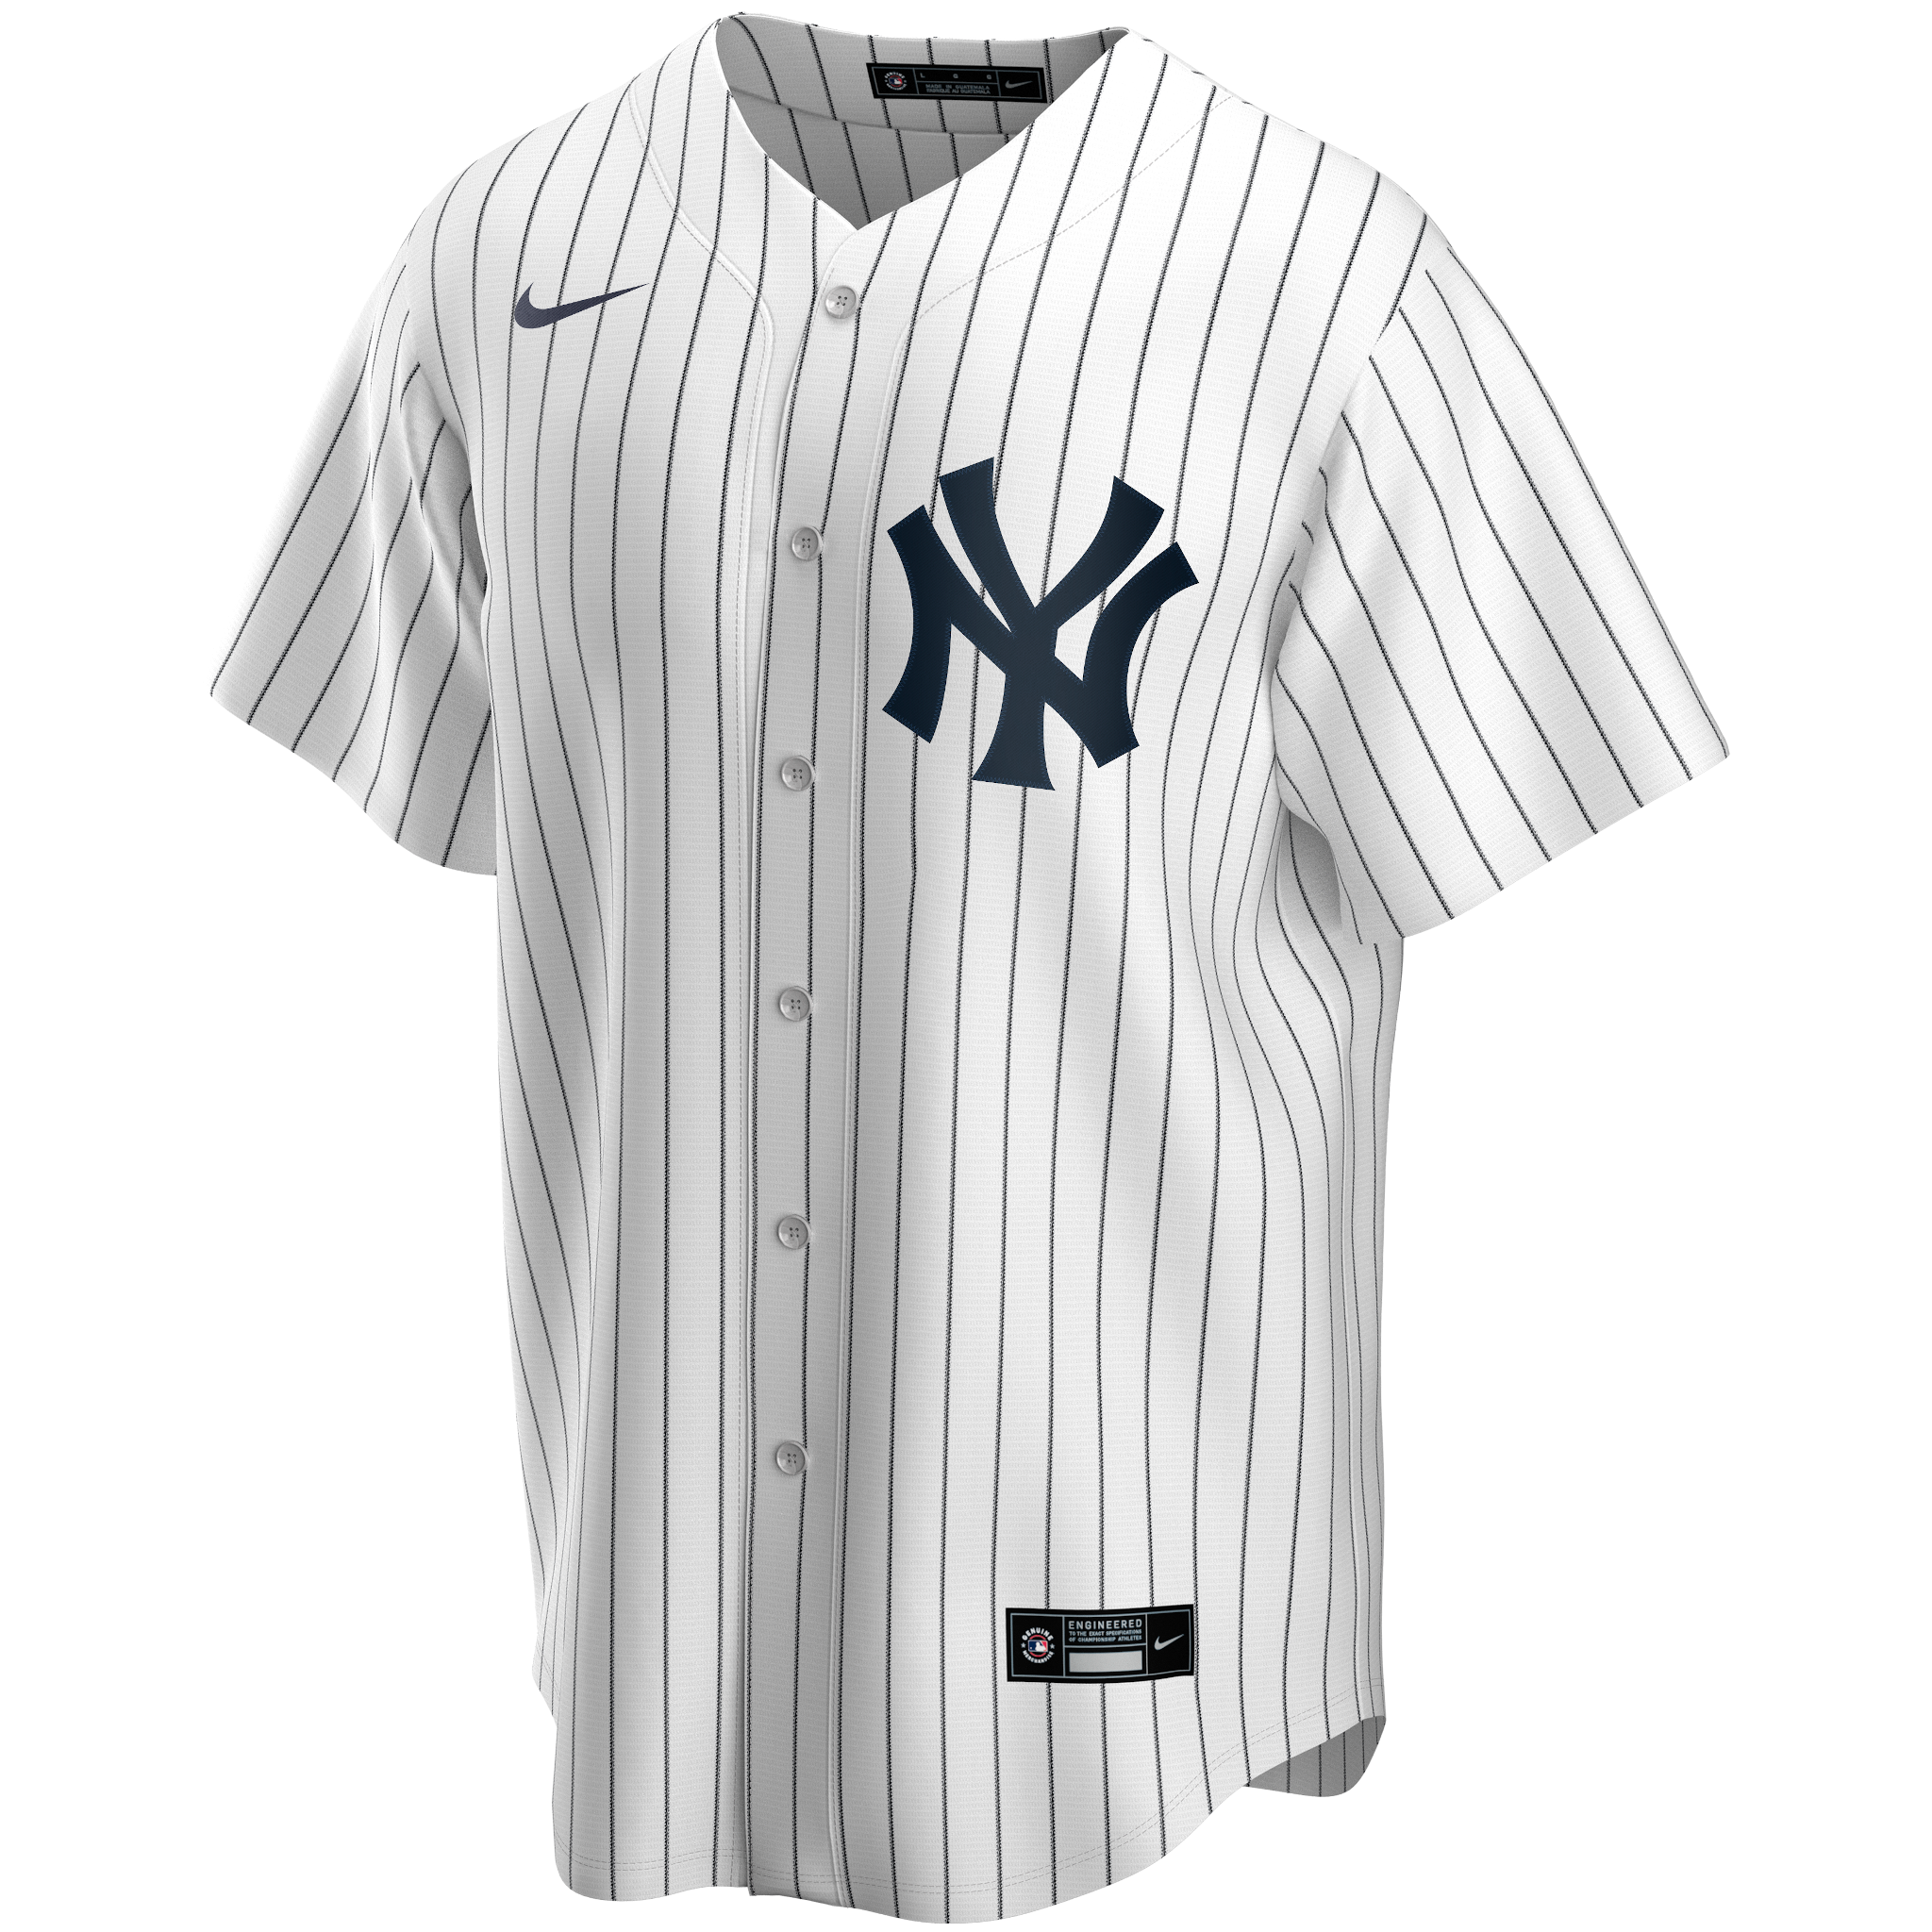 Men's New York Yankees Majestic Gerrit Cole Home Jersey